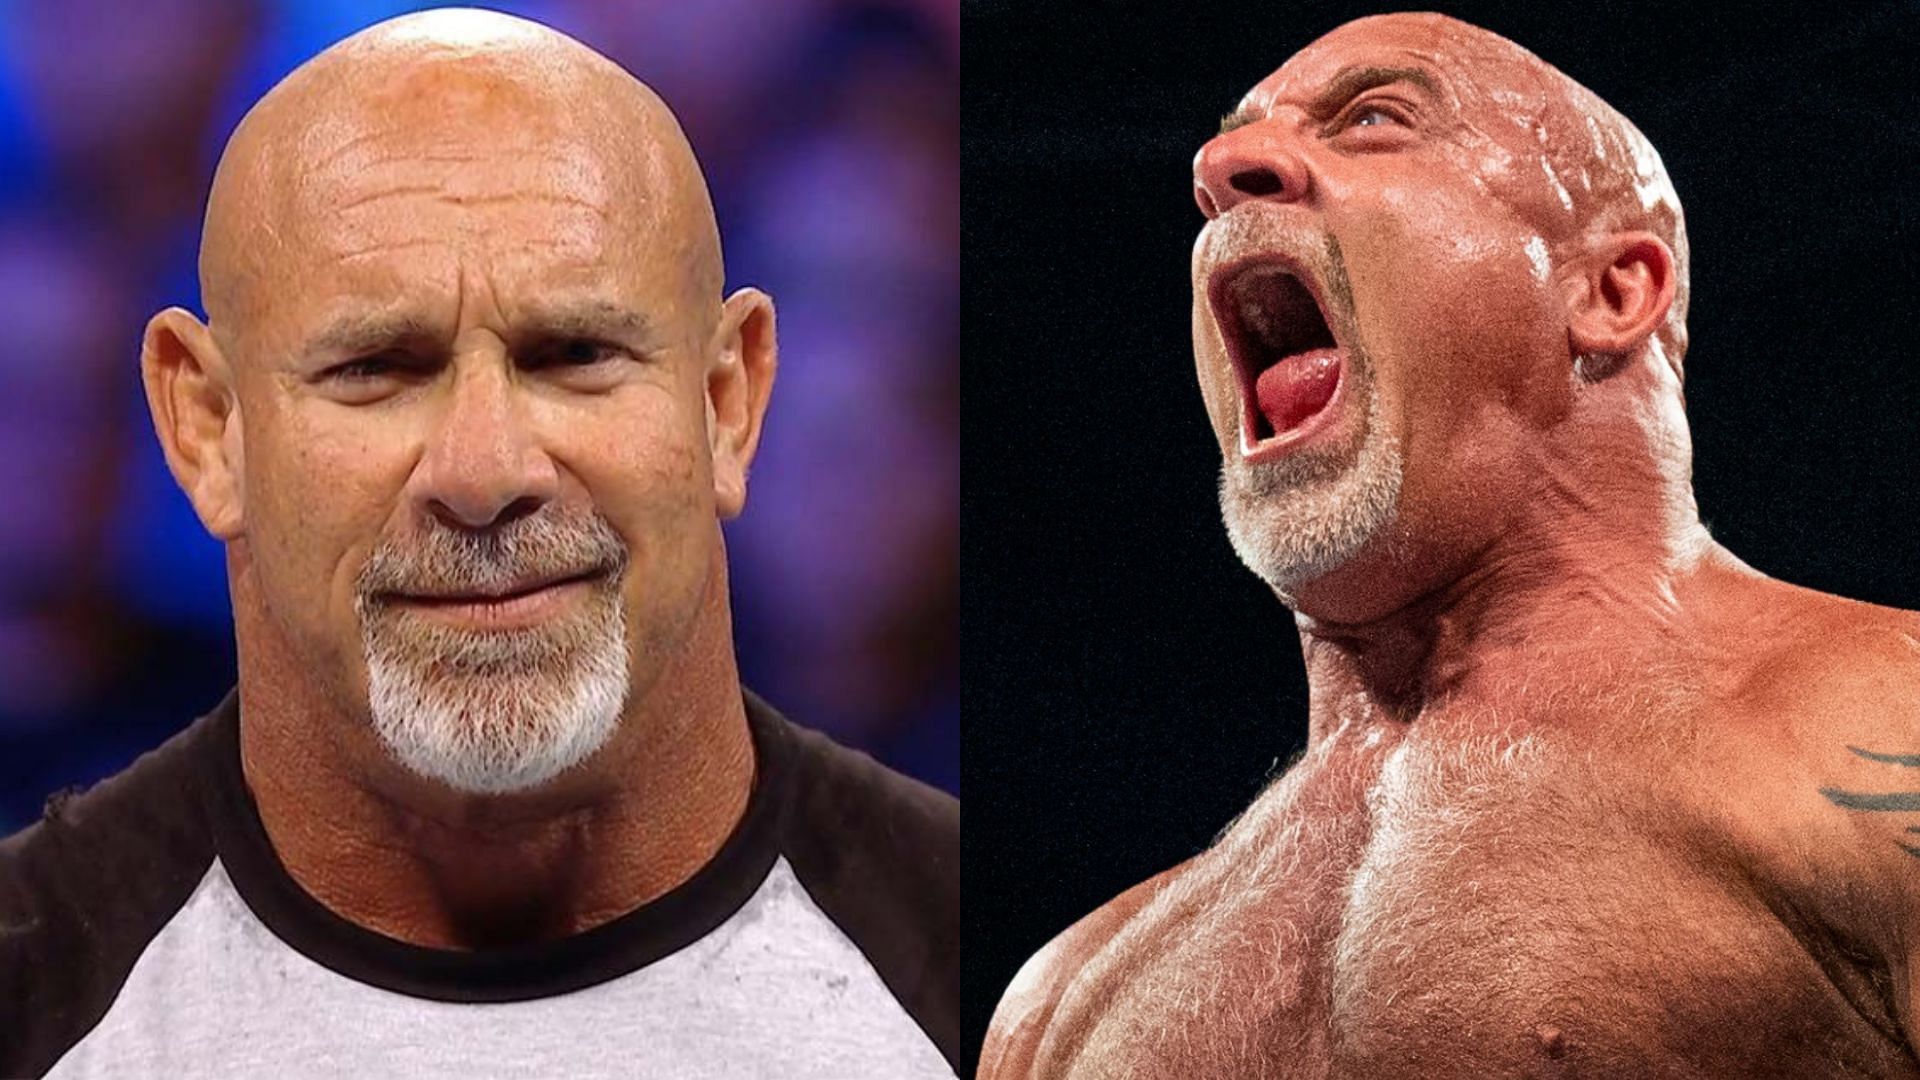 Goldberg is a legendary professional wrestler.